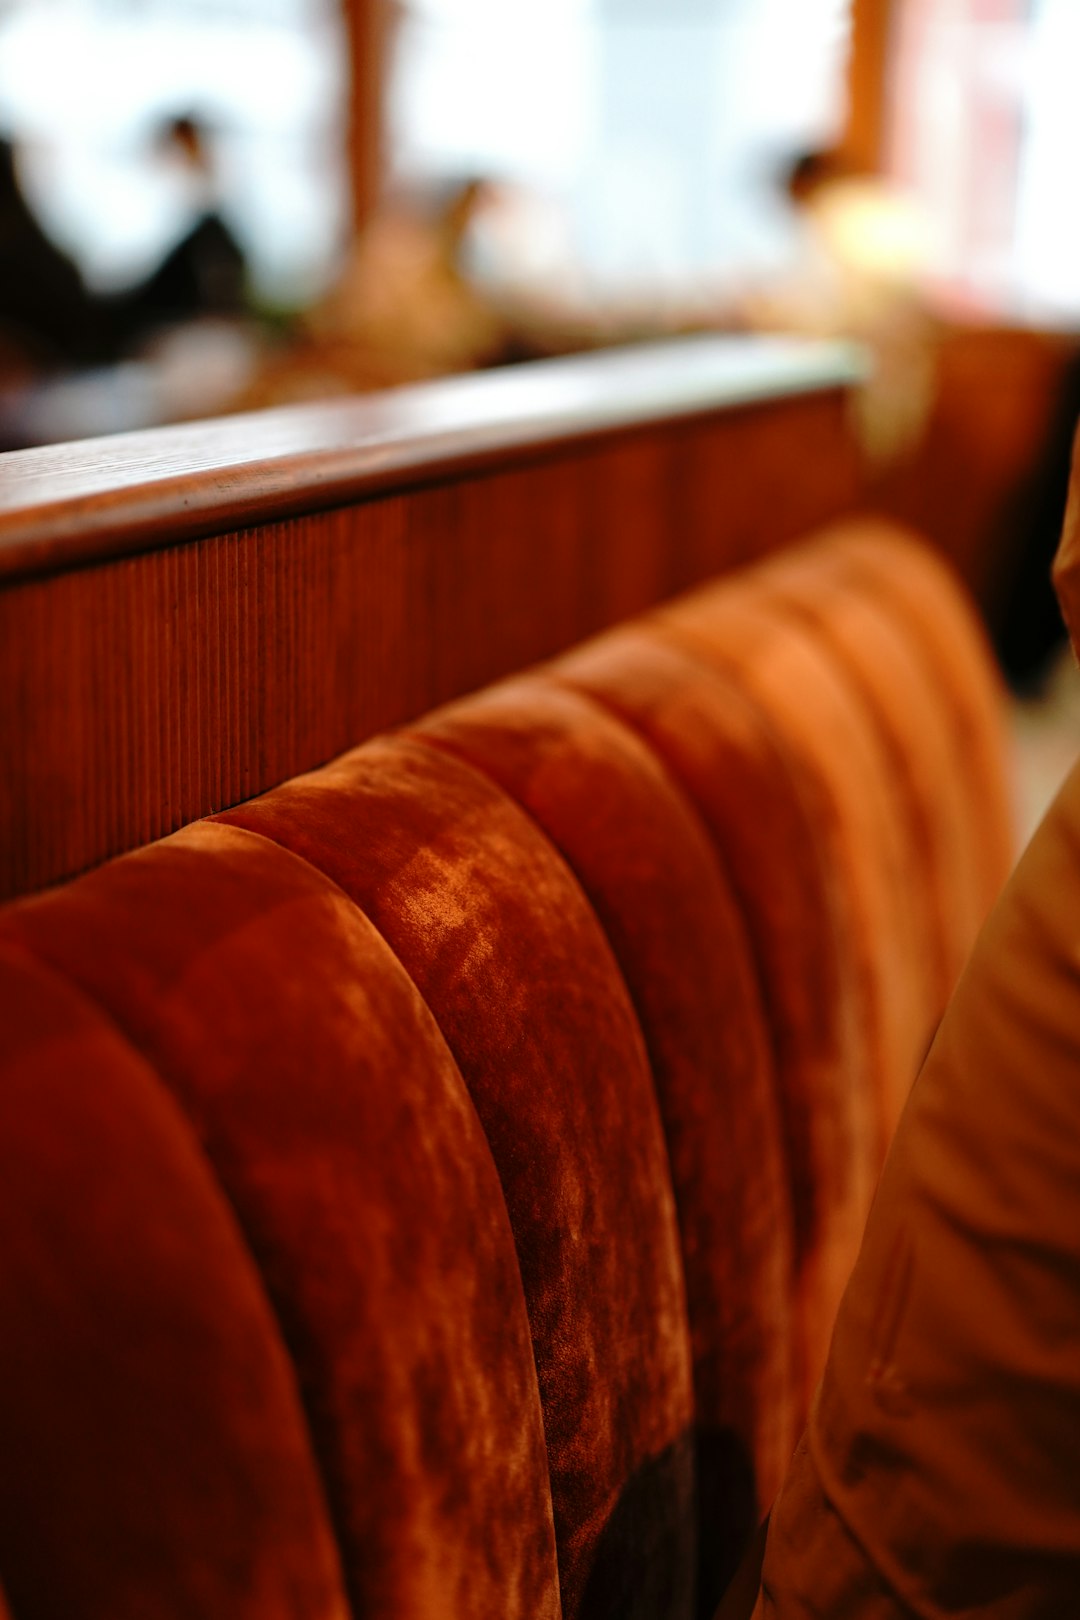 brown wooden chair in tilt shift lens